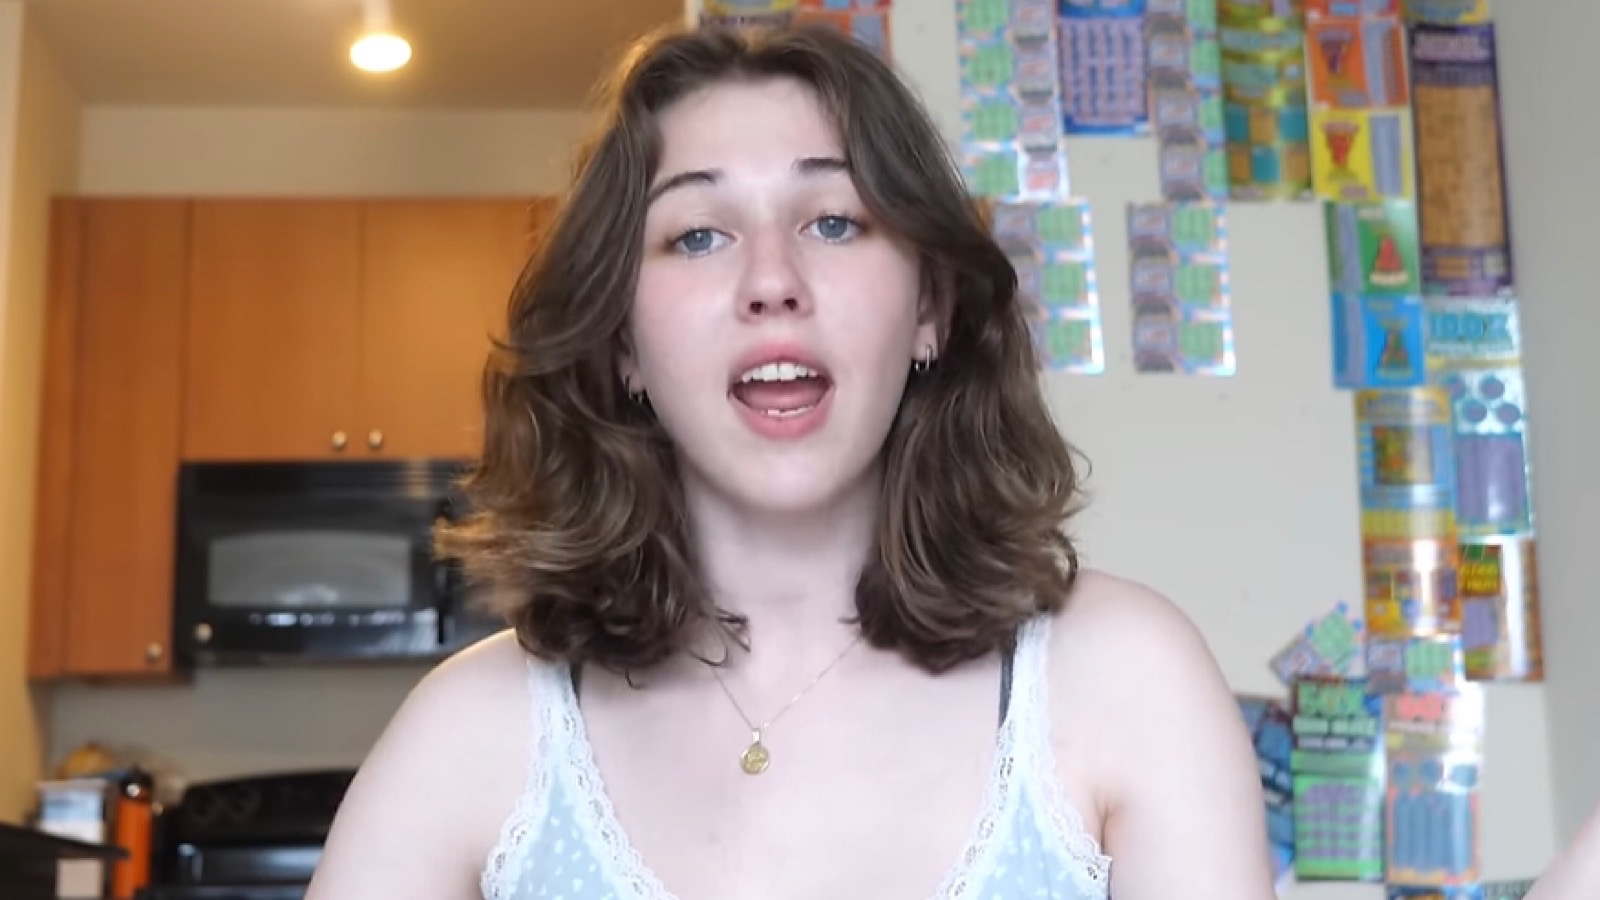 YouTuber Caroline Konstnar slammed for “faking” 13-week pregnancy to promote her Patreon - Dexerto